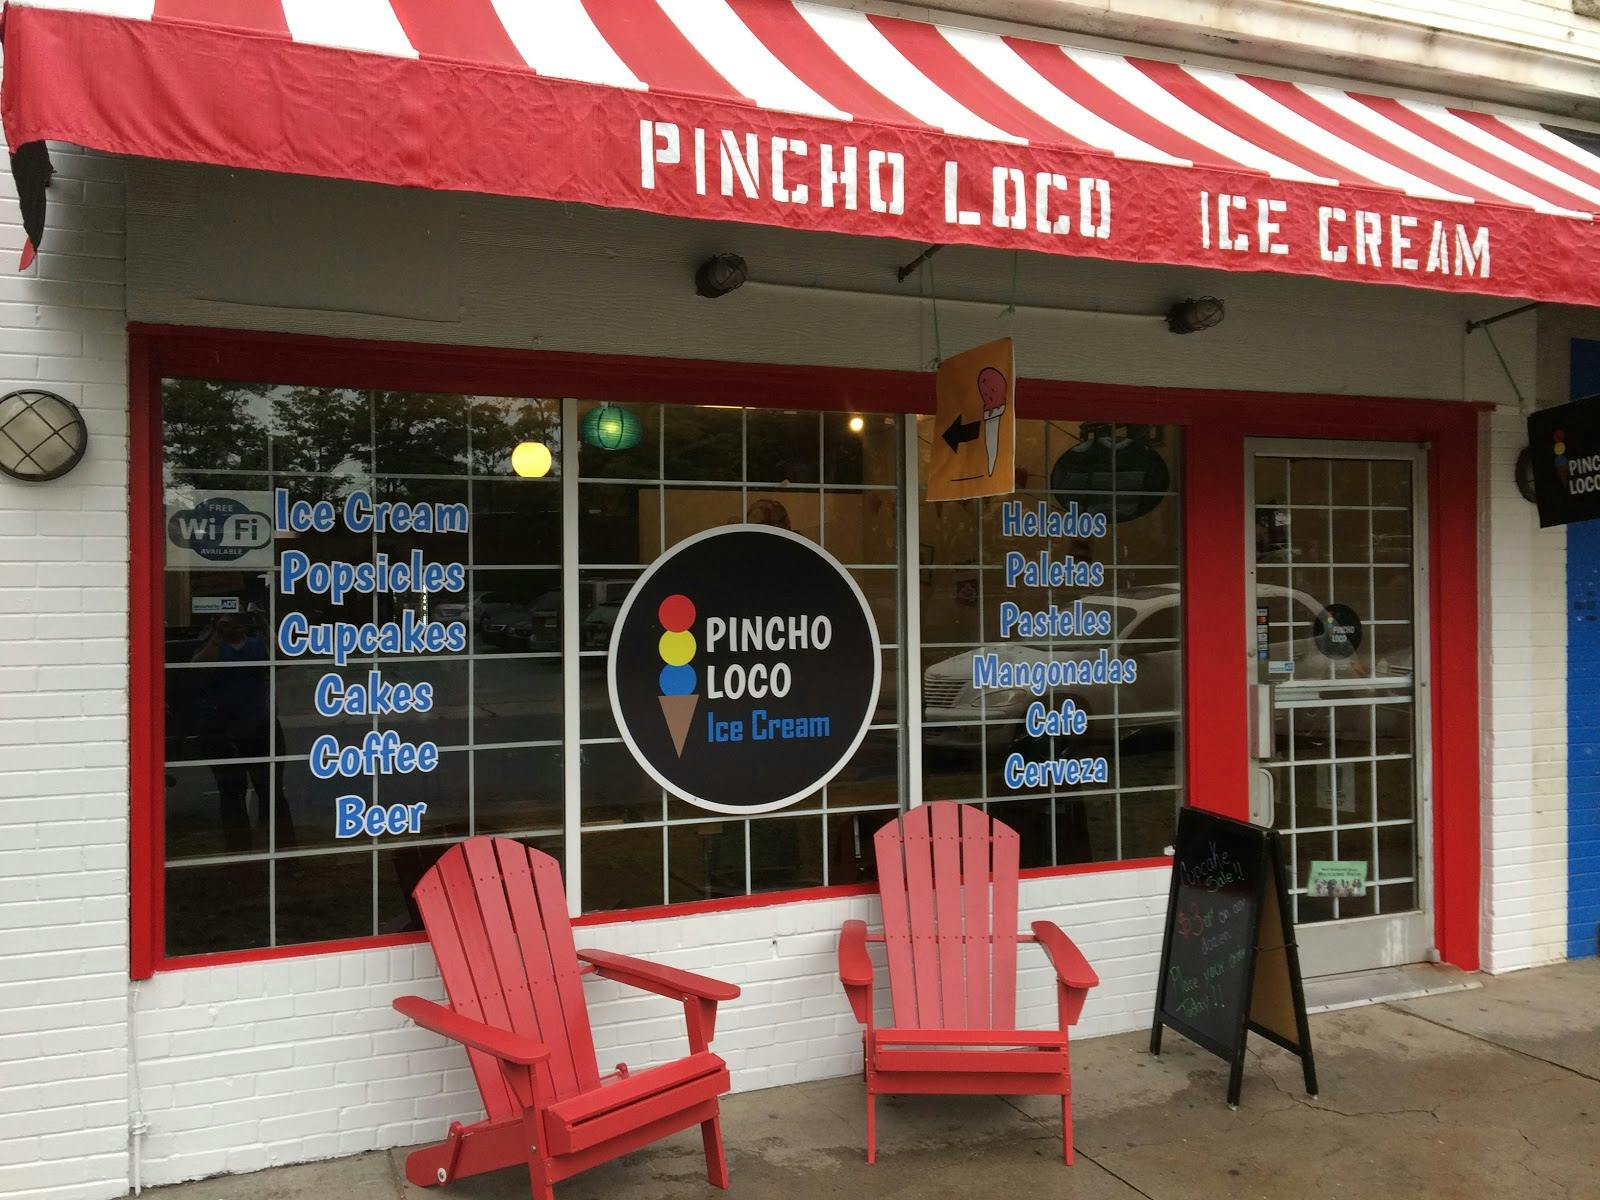 Image - Pincho Loco Ice Cream